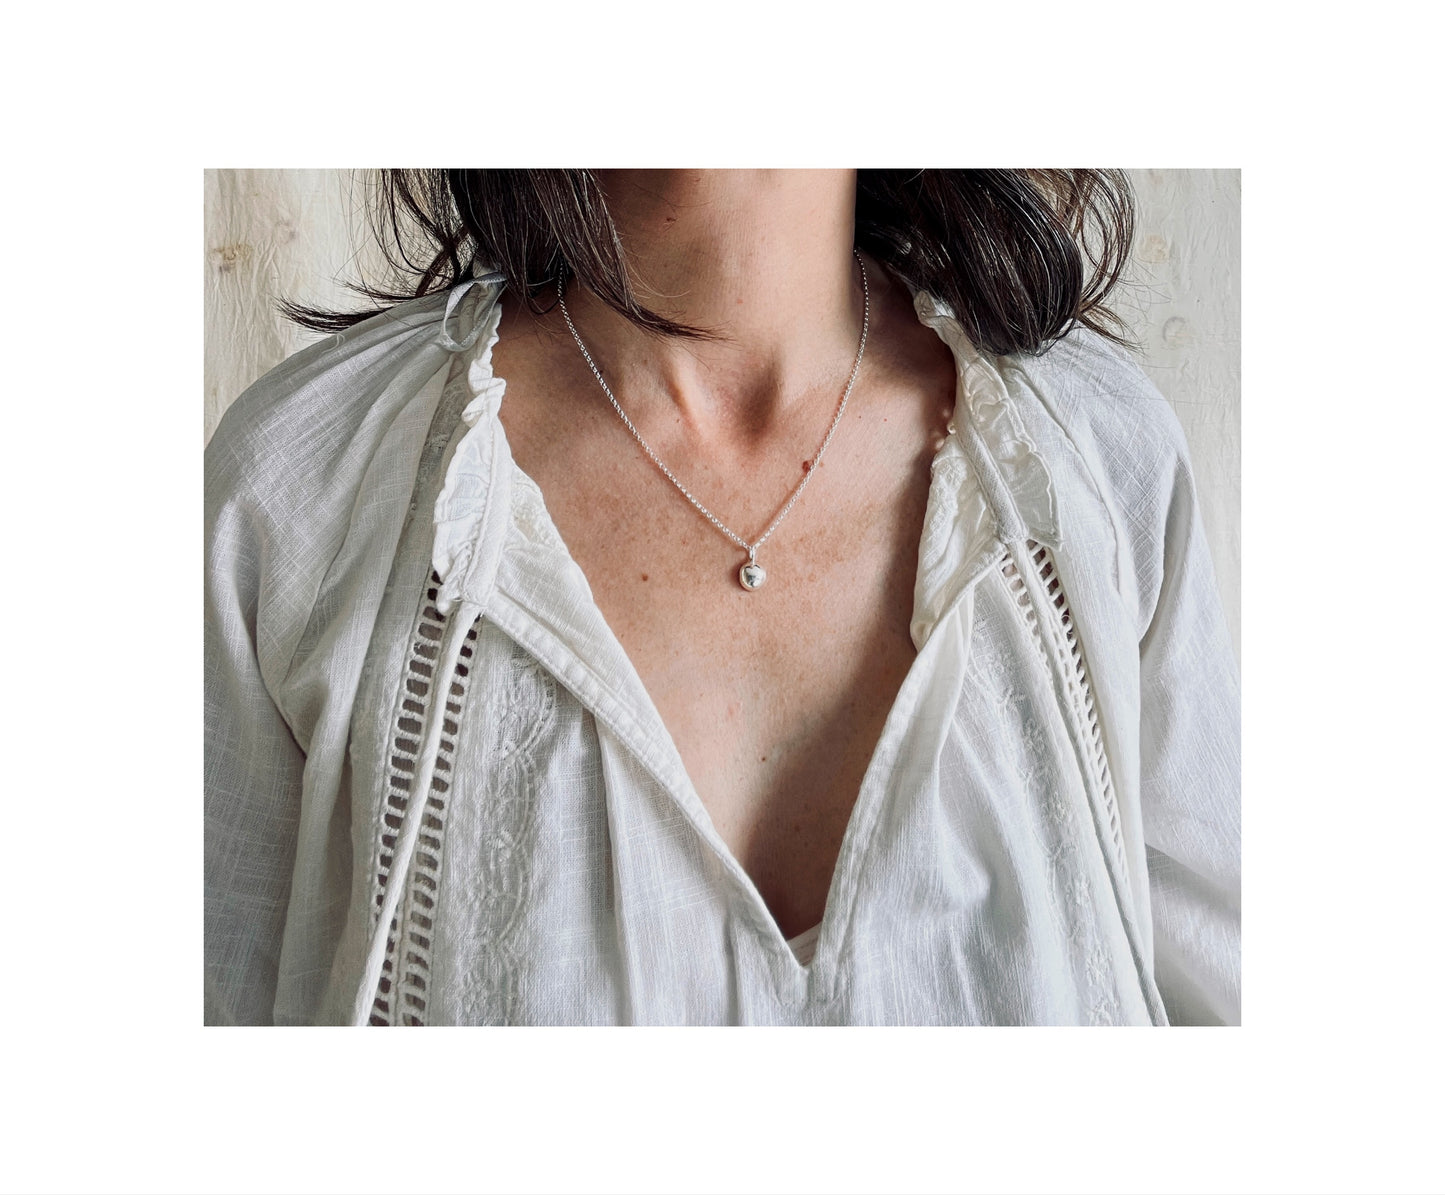 Pebble necklace